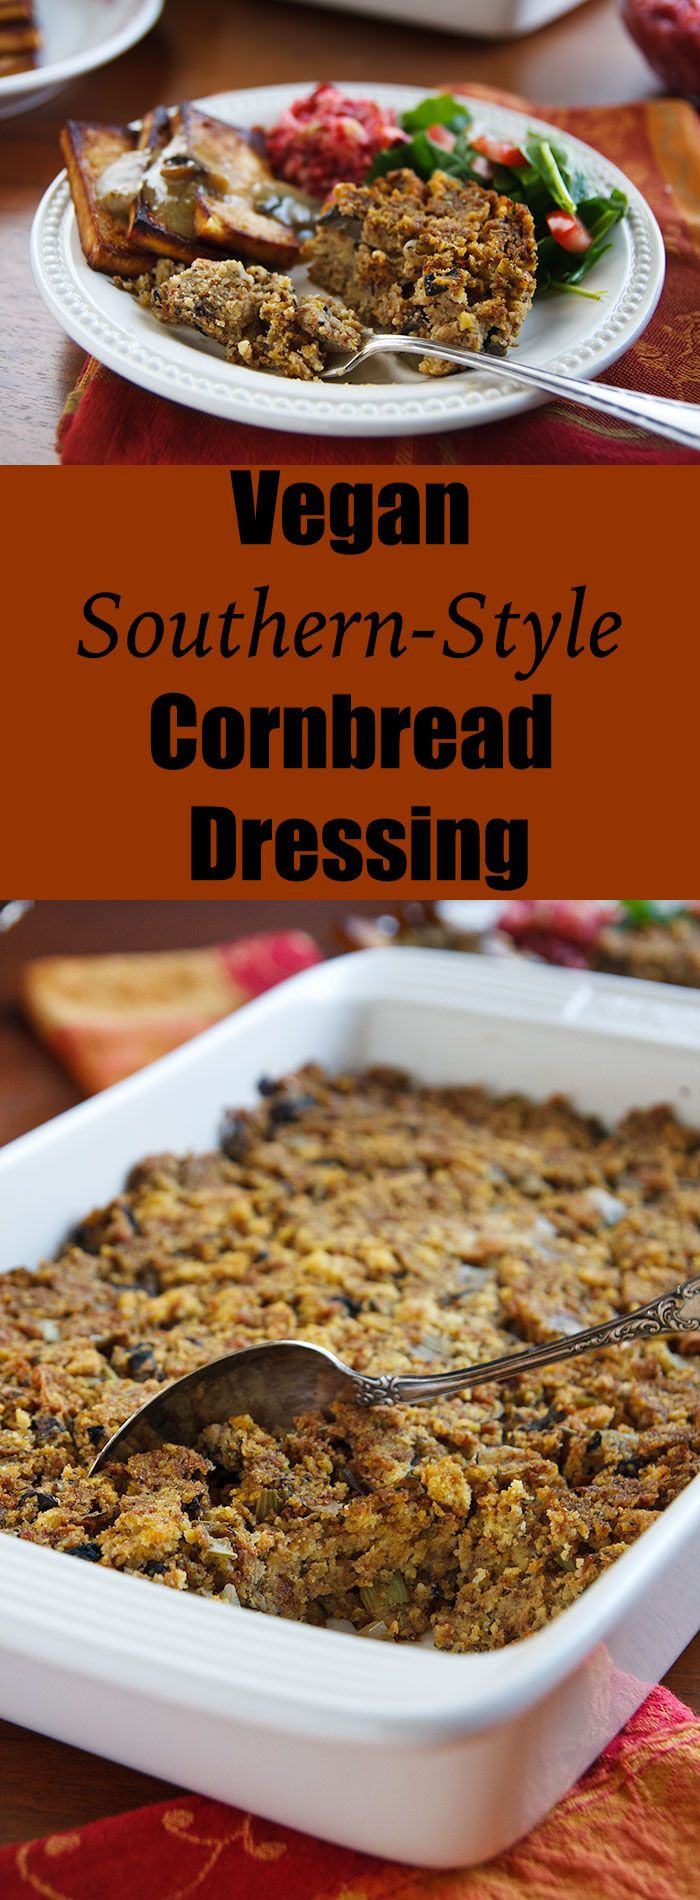 Vegan Thanksgiving Dressing
 Vegan Southern Style Cornbread Dressing Recipe